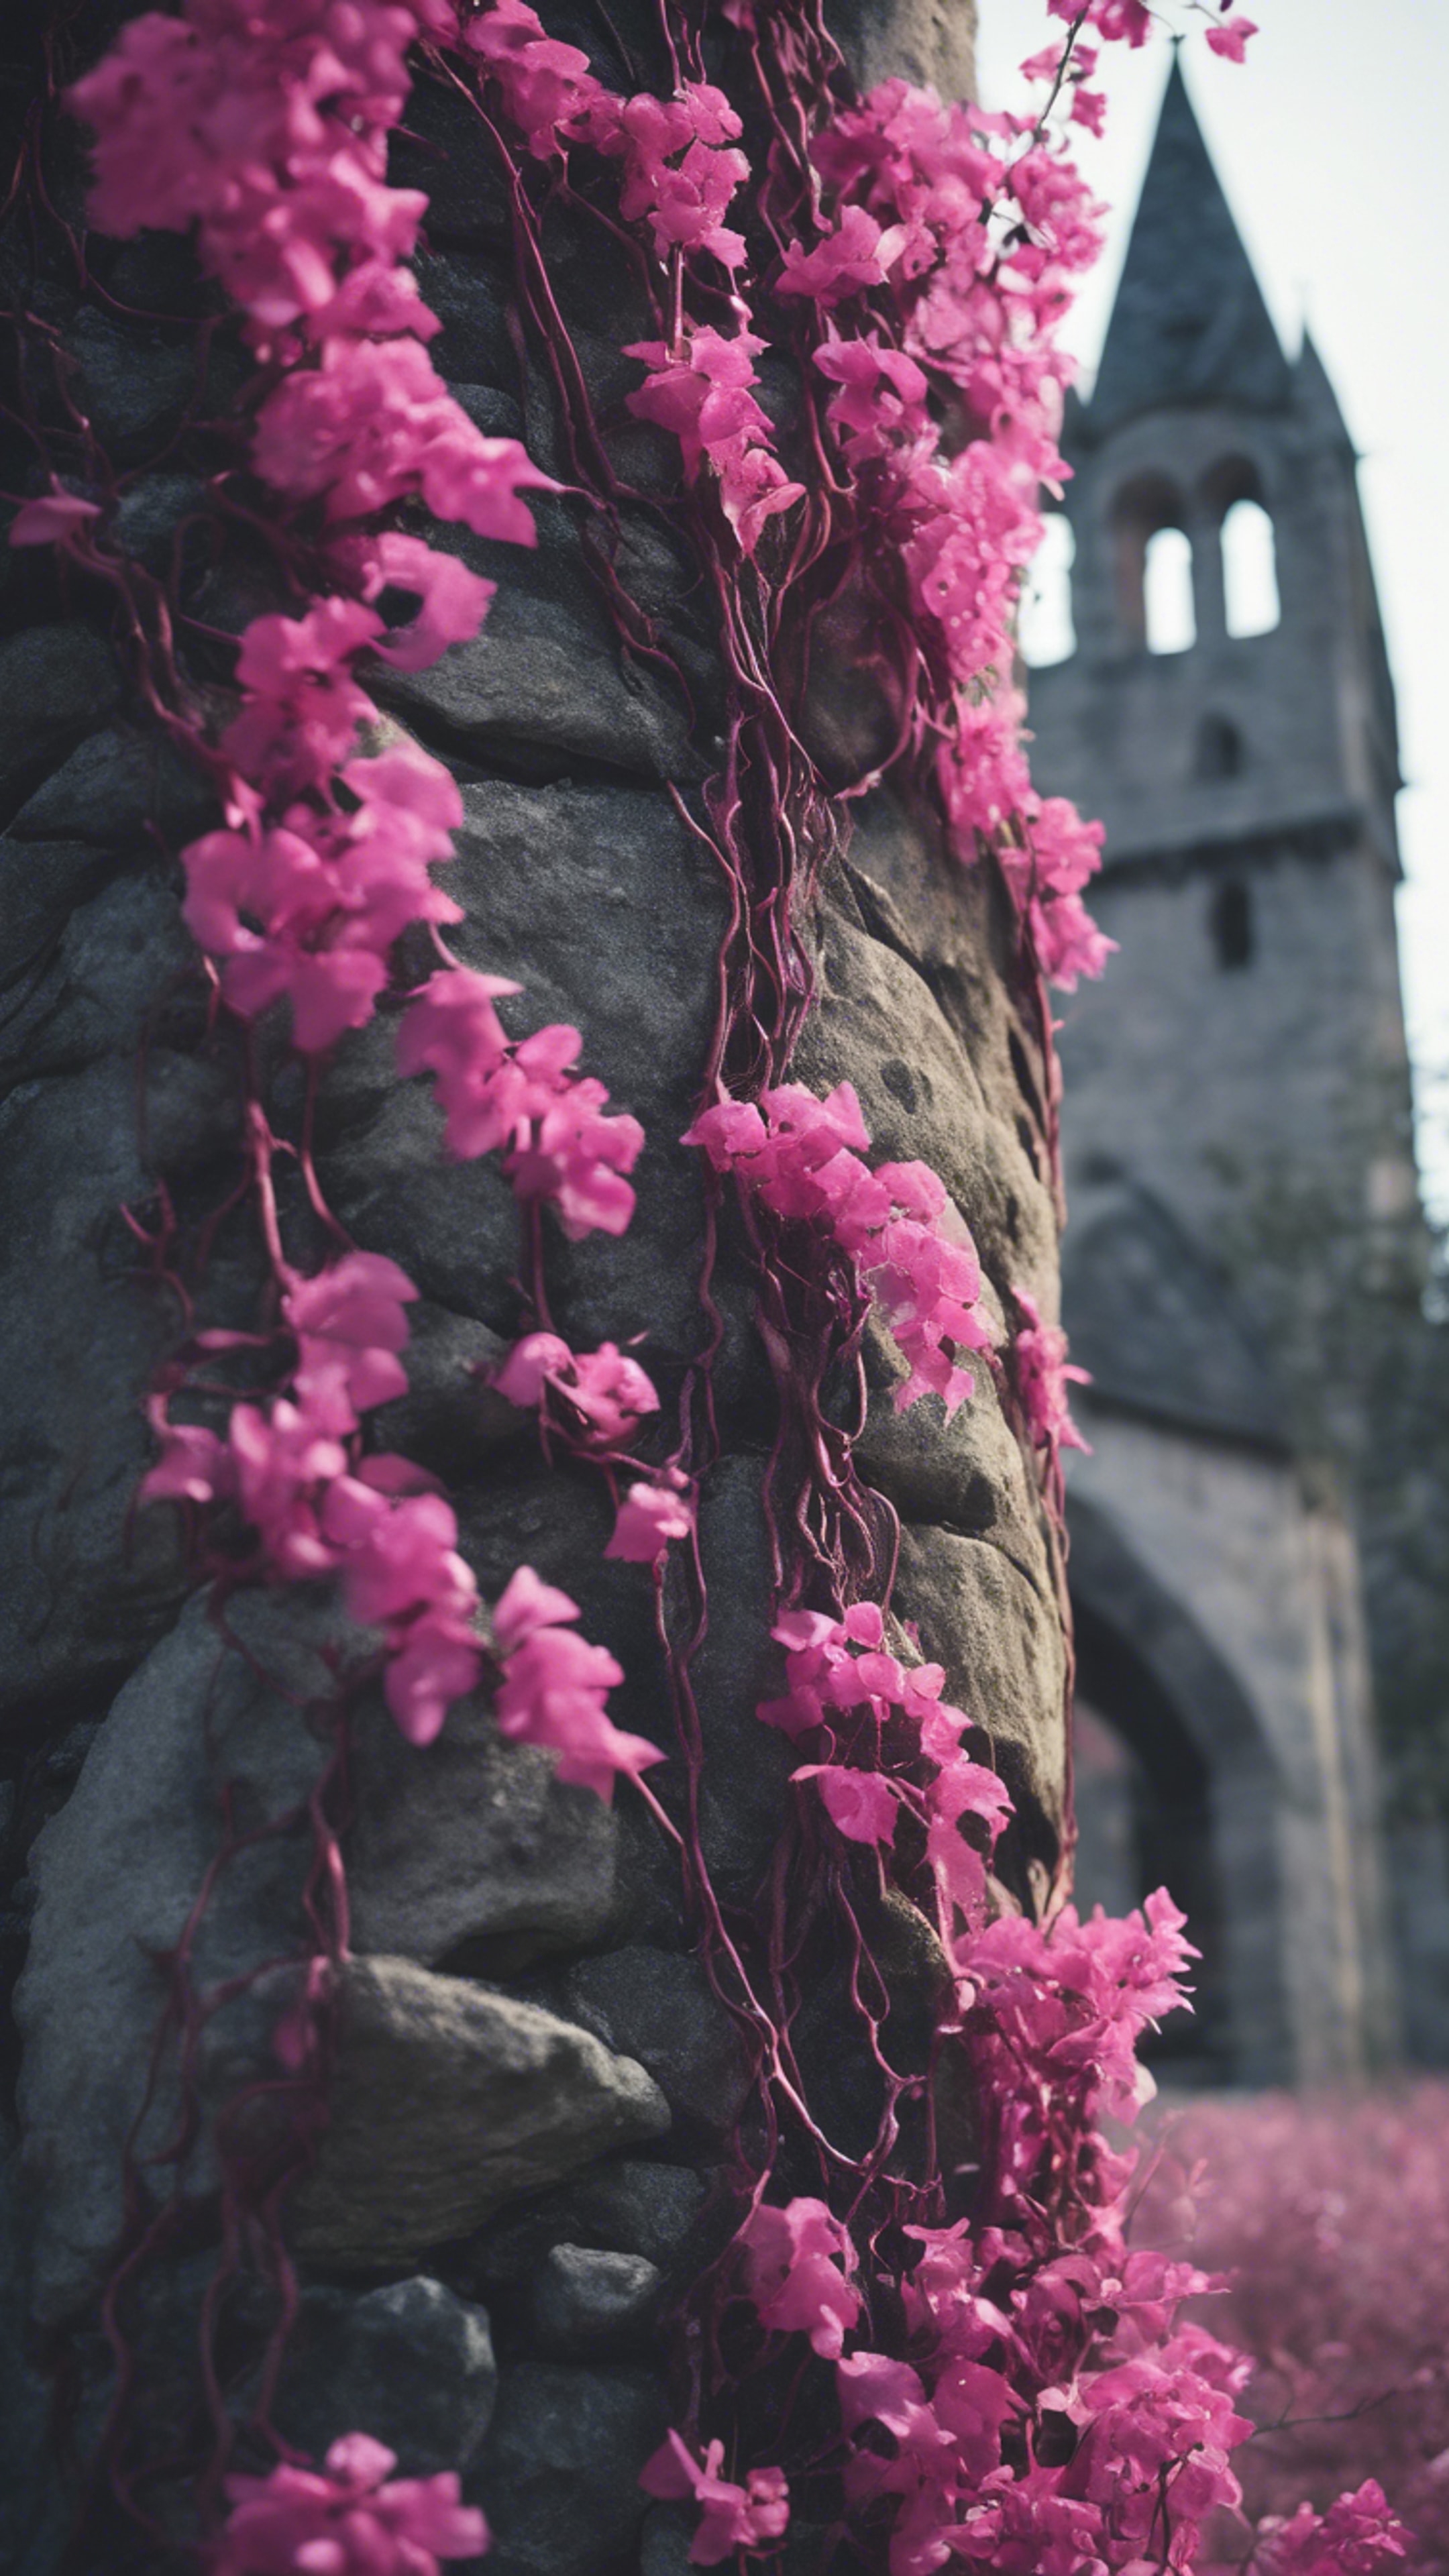 Dark pink Gothic vines creeping up a stone tower. Tapeta na zeď[2209f0af7d054e0296c9]